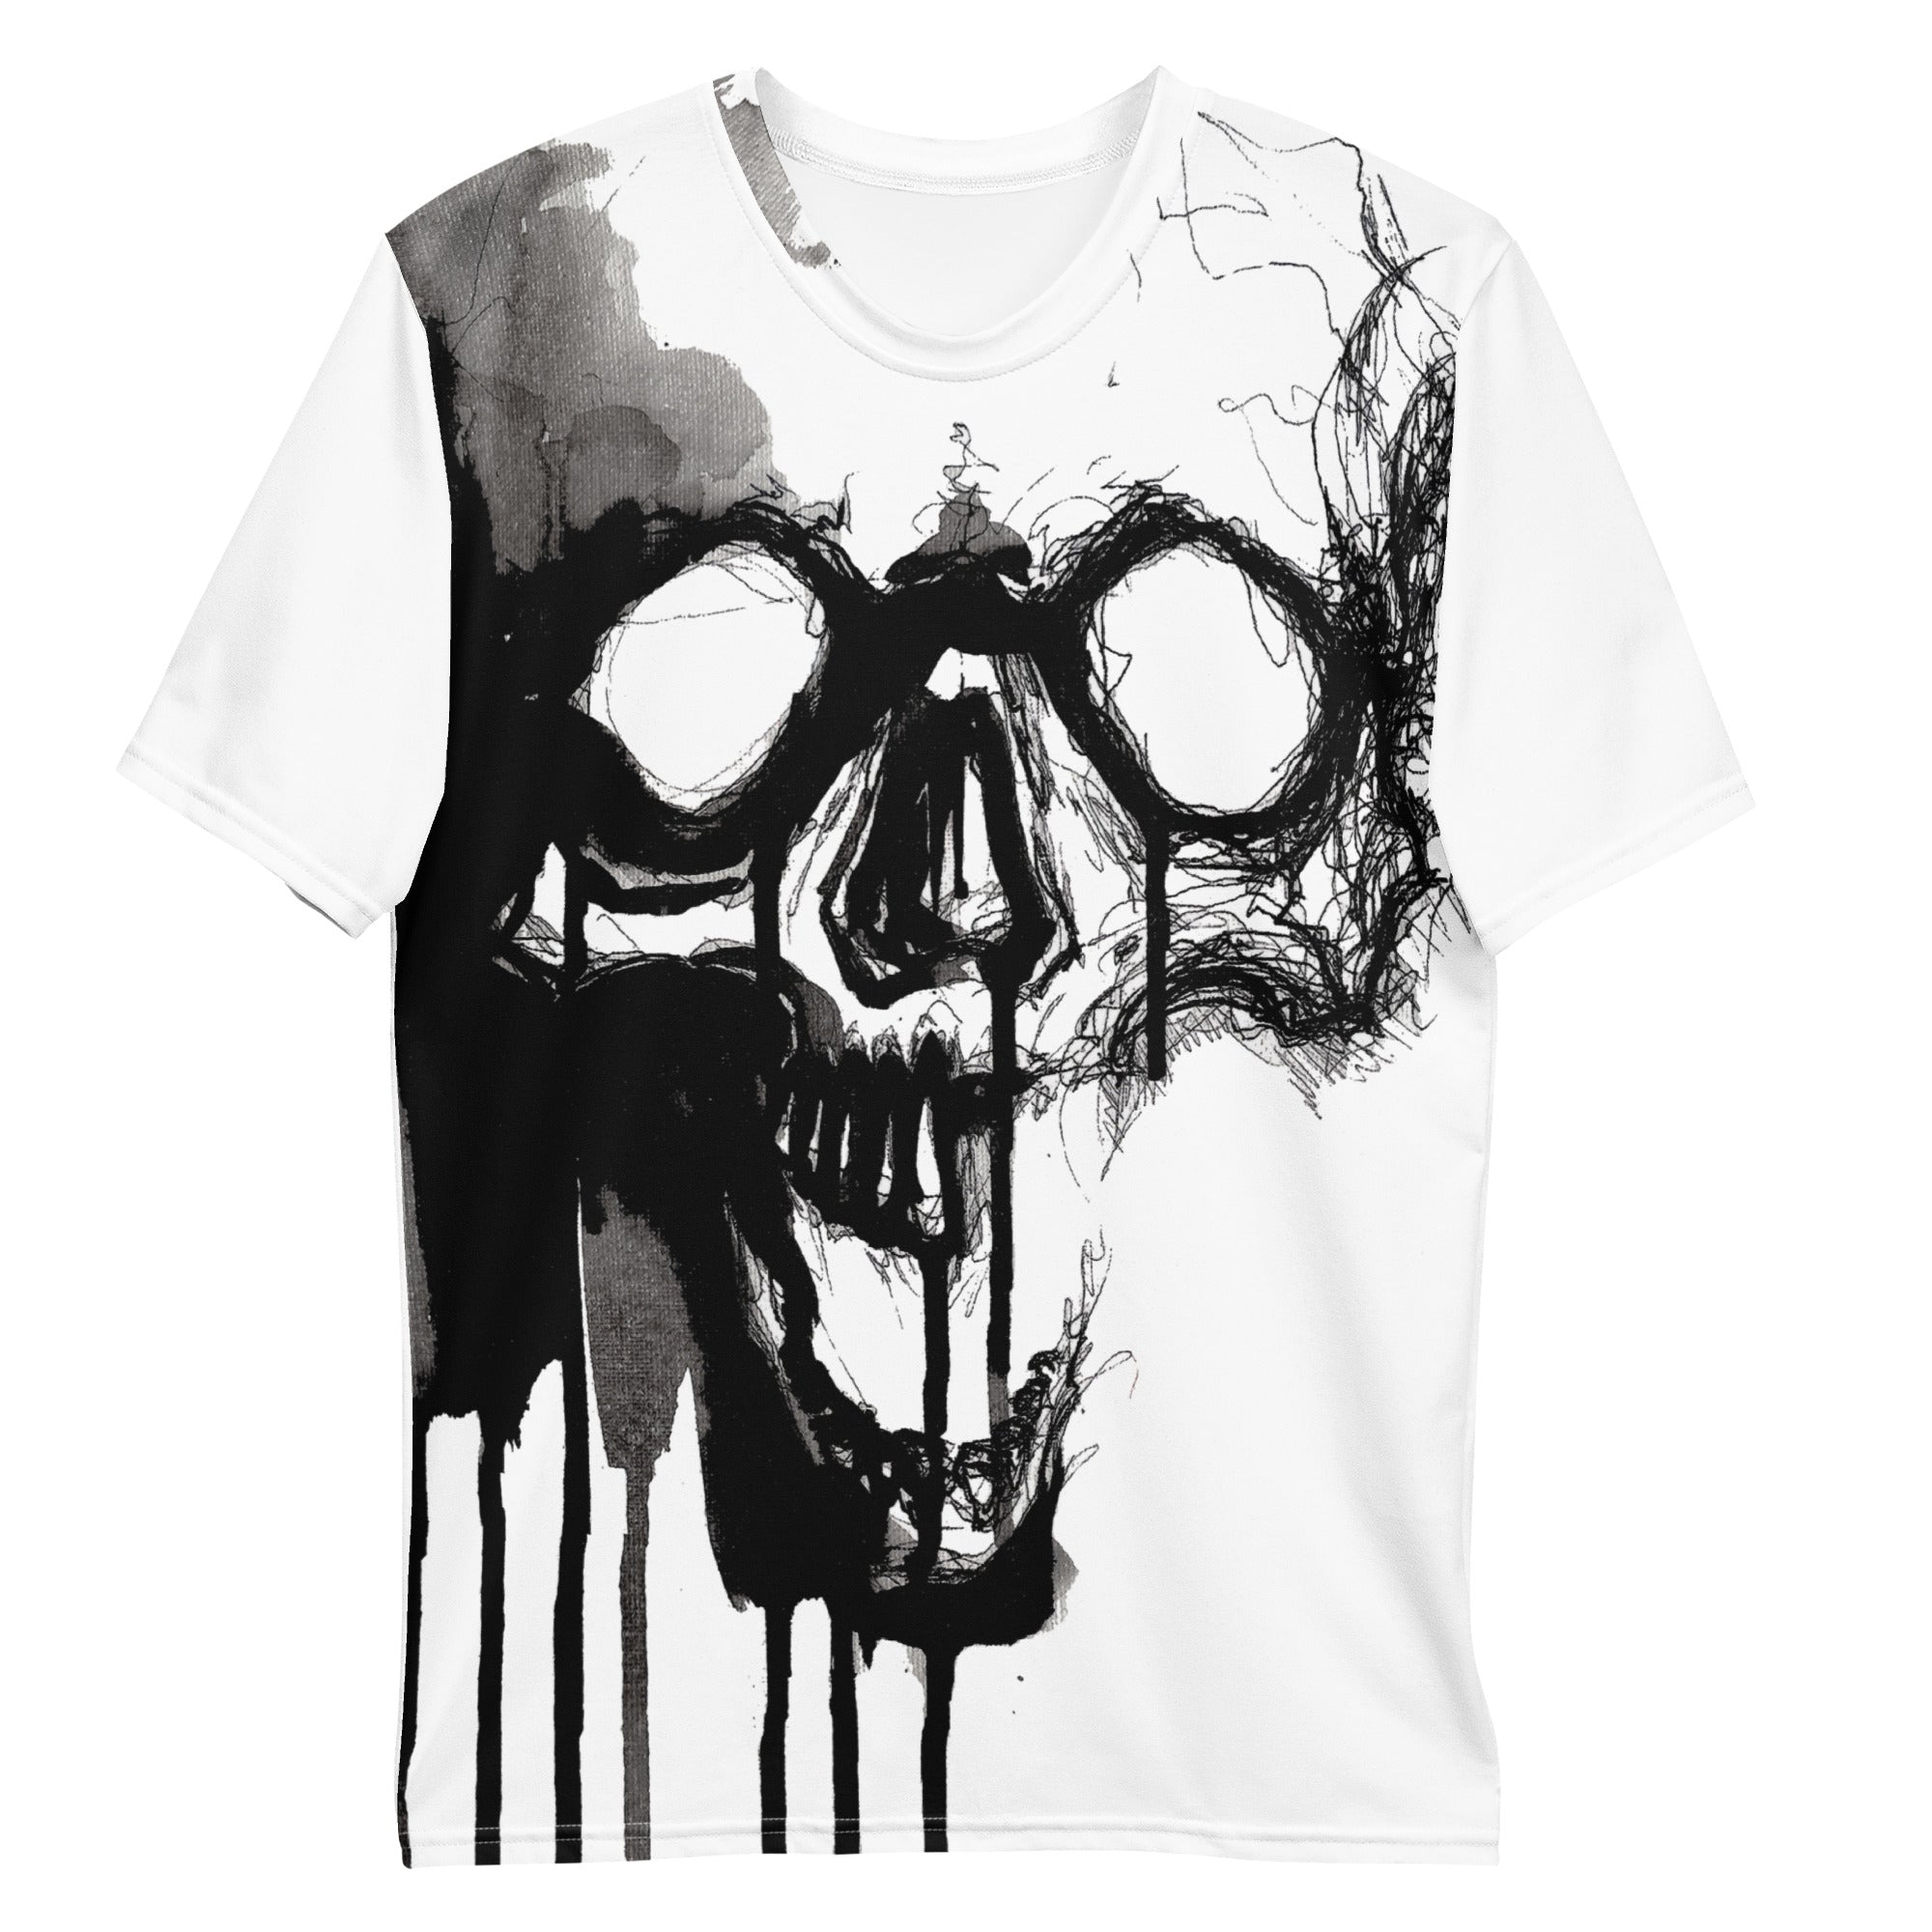 Black Ink Skull Men's T-Shirt